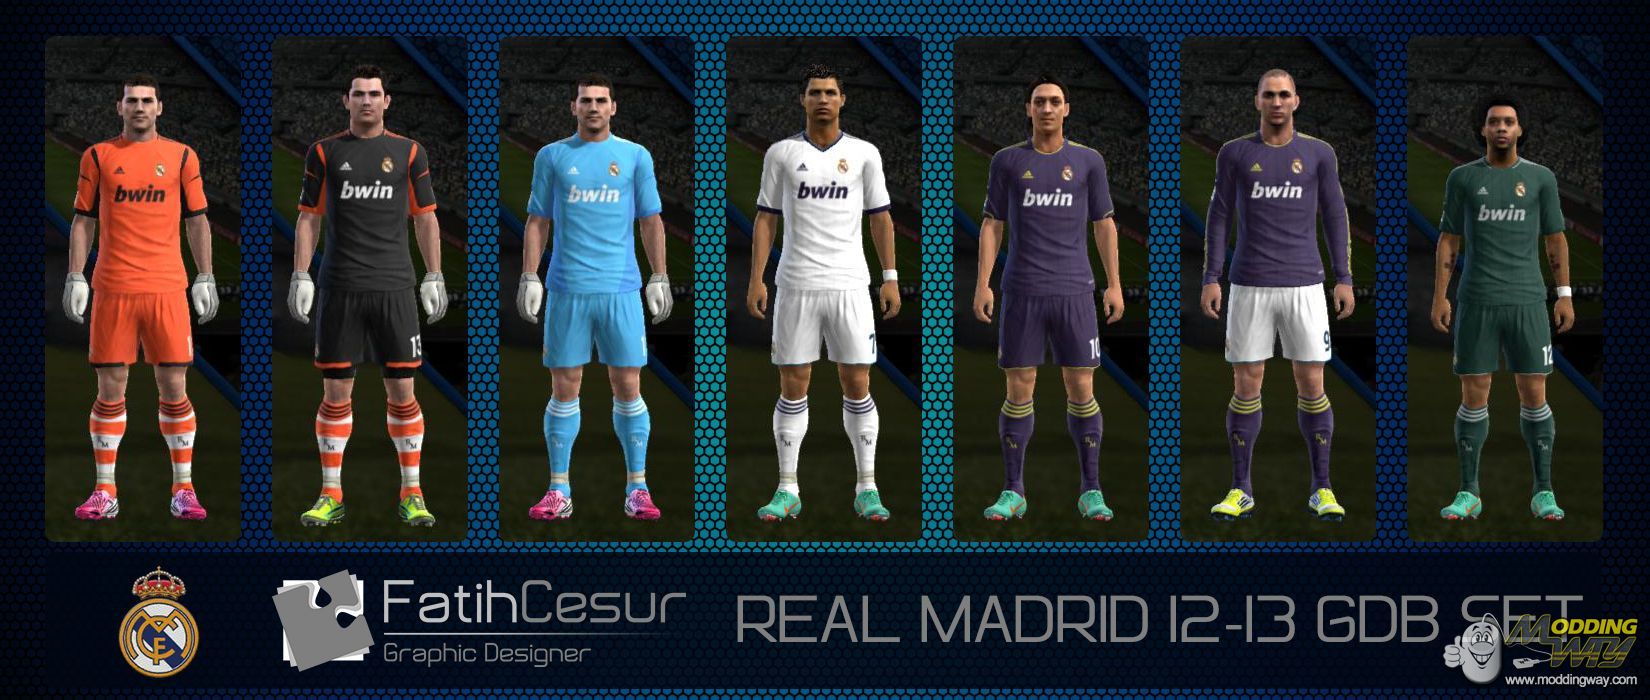 Real Madrid 1213 GDB Kit Set Pro Evolution Soccer 2013